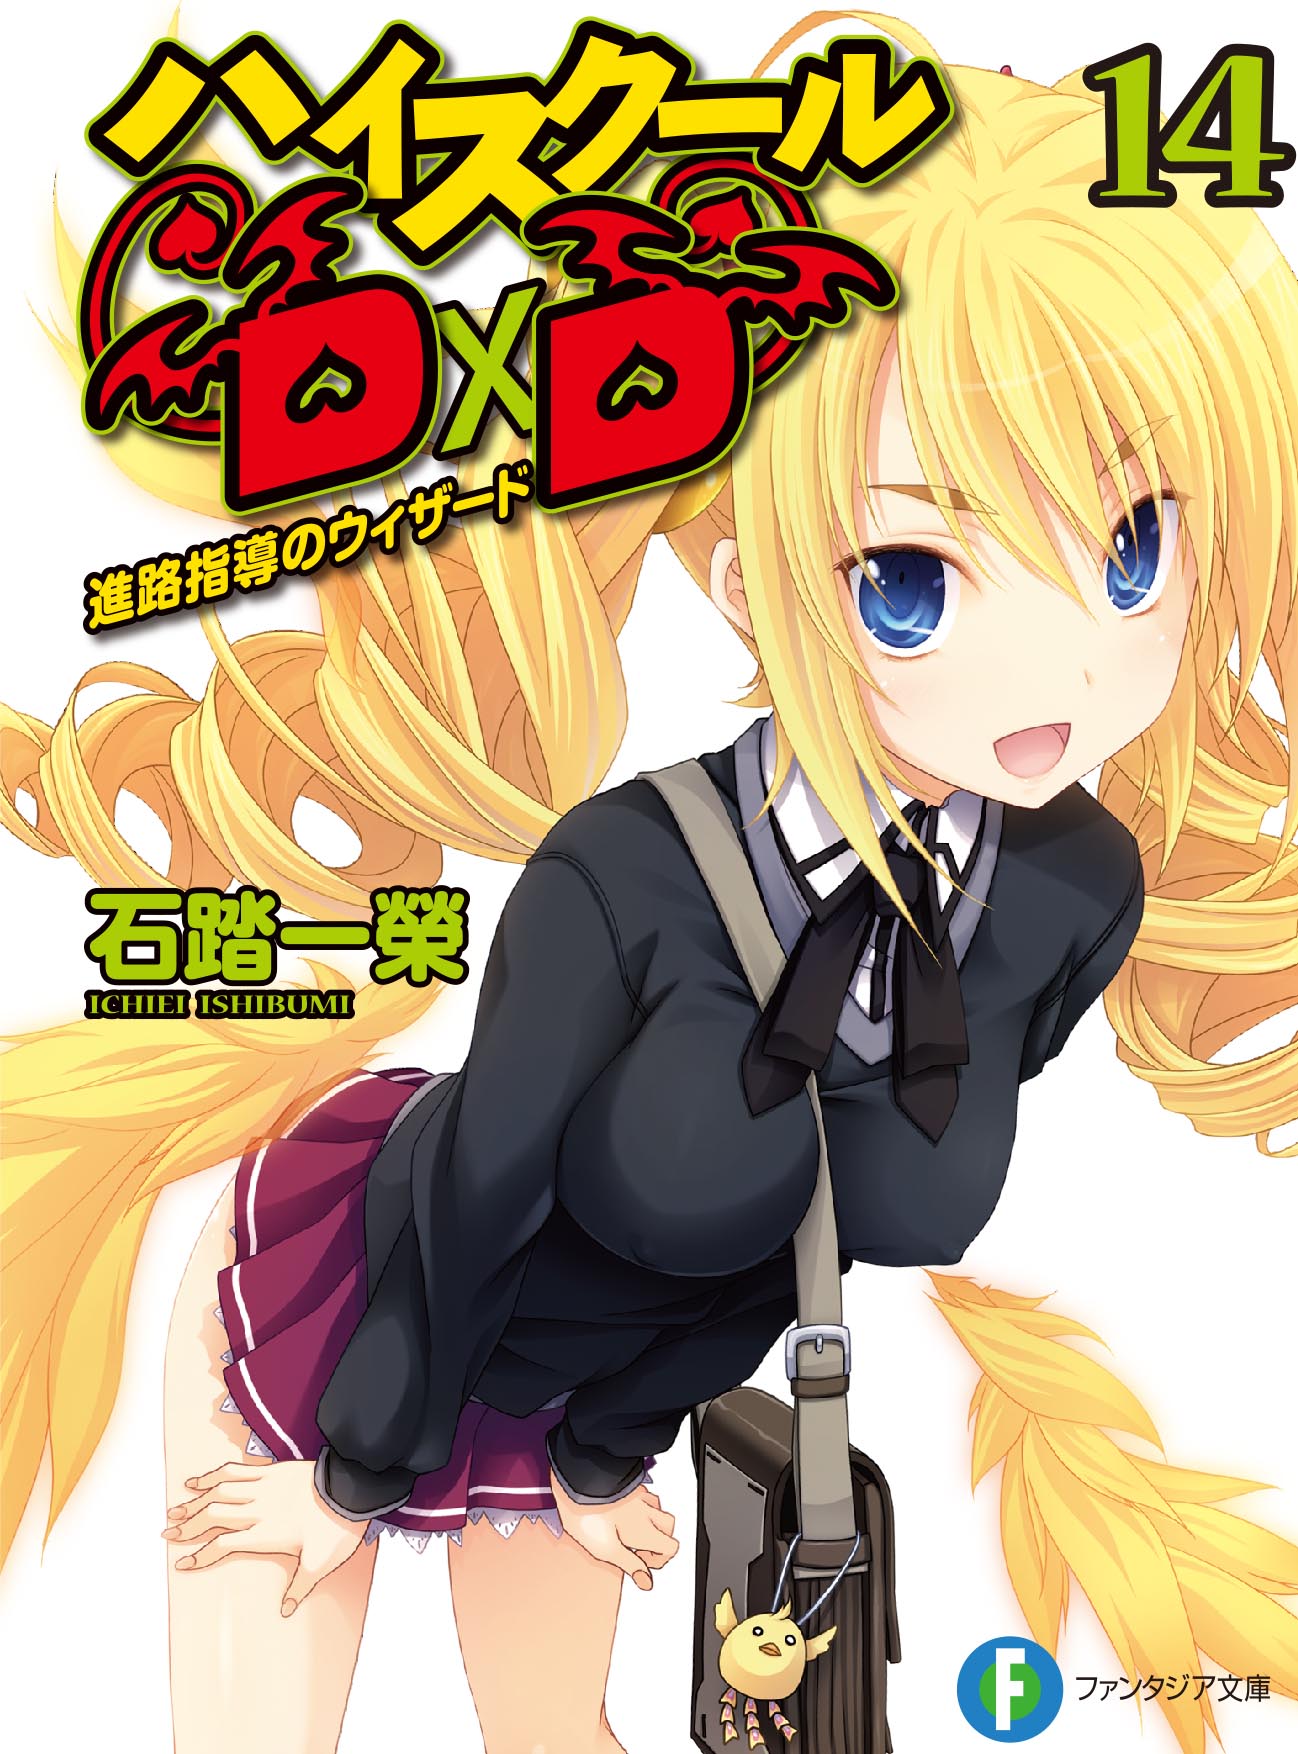 True High School DxD Vol. 1 (Light Novel)